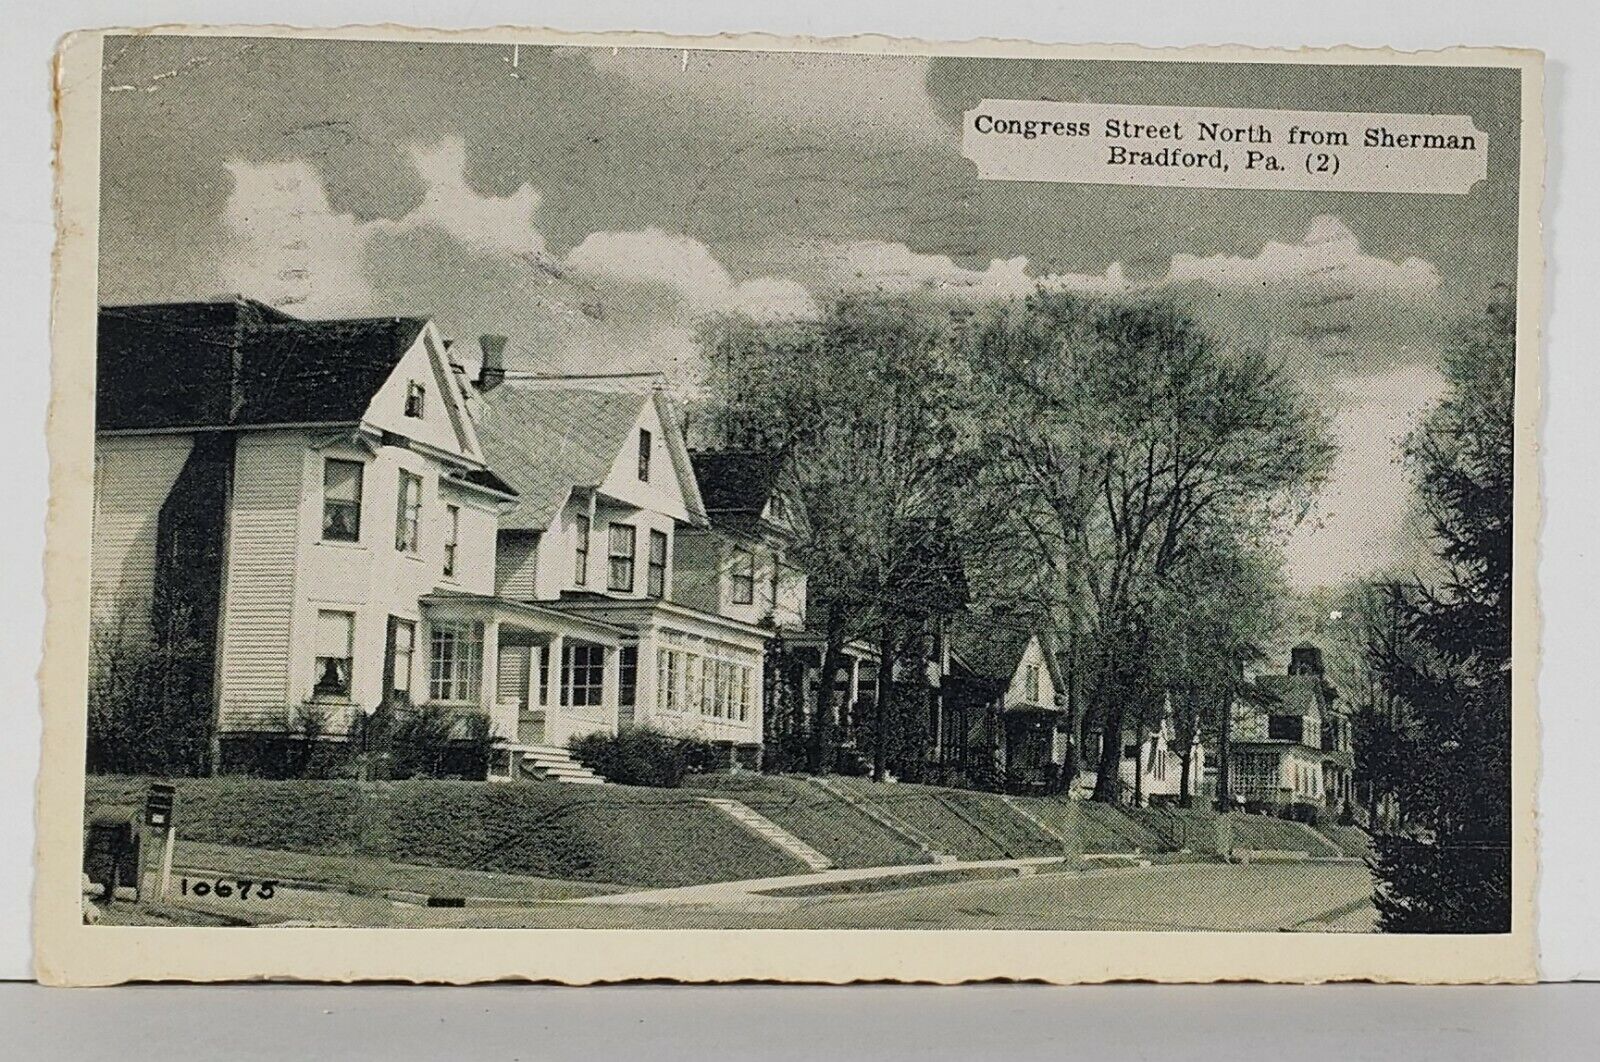 BRADFORD PA Congress Street North from Sherman c1940 Postcard Q9